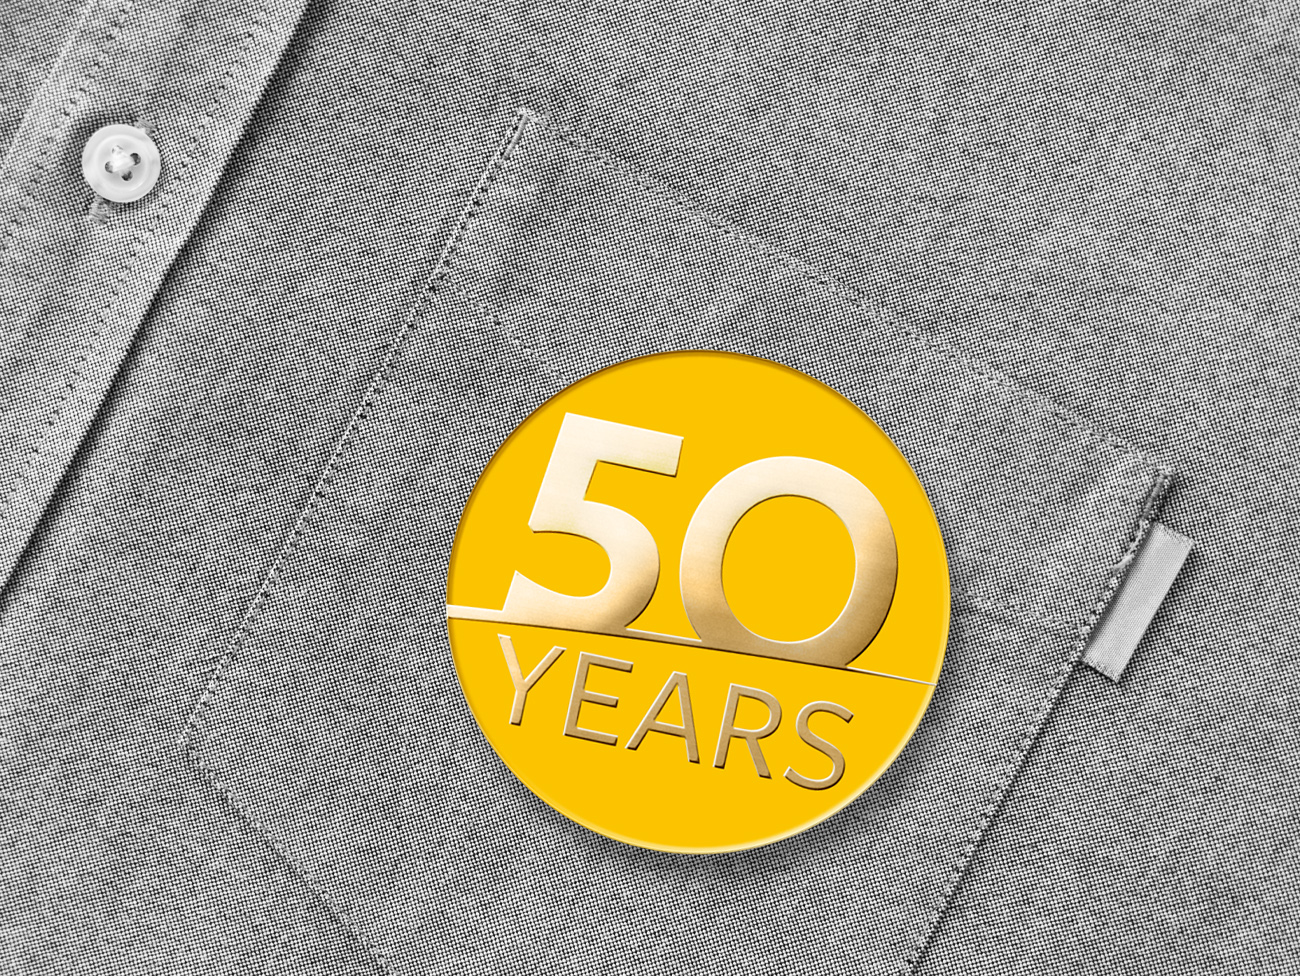 Solidaridad, jubileumlogo, logo, jubileum, 50 years, 50 jaar, animatie, gif, feest, goud, gouden, visitekaartje, business card, lint, lintje, magazine